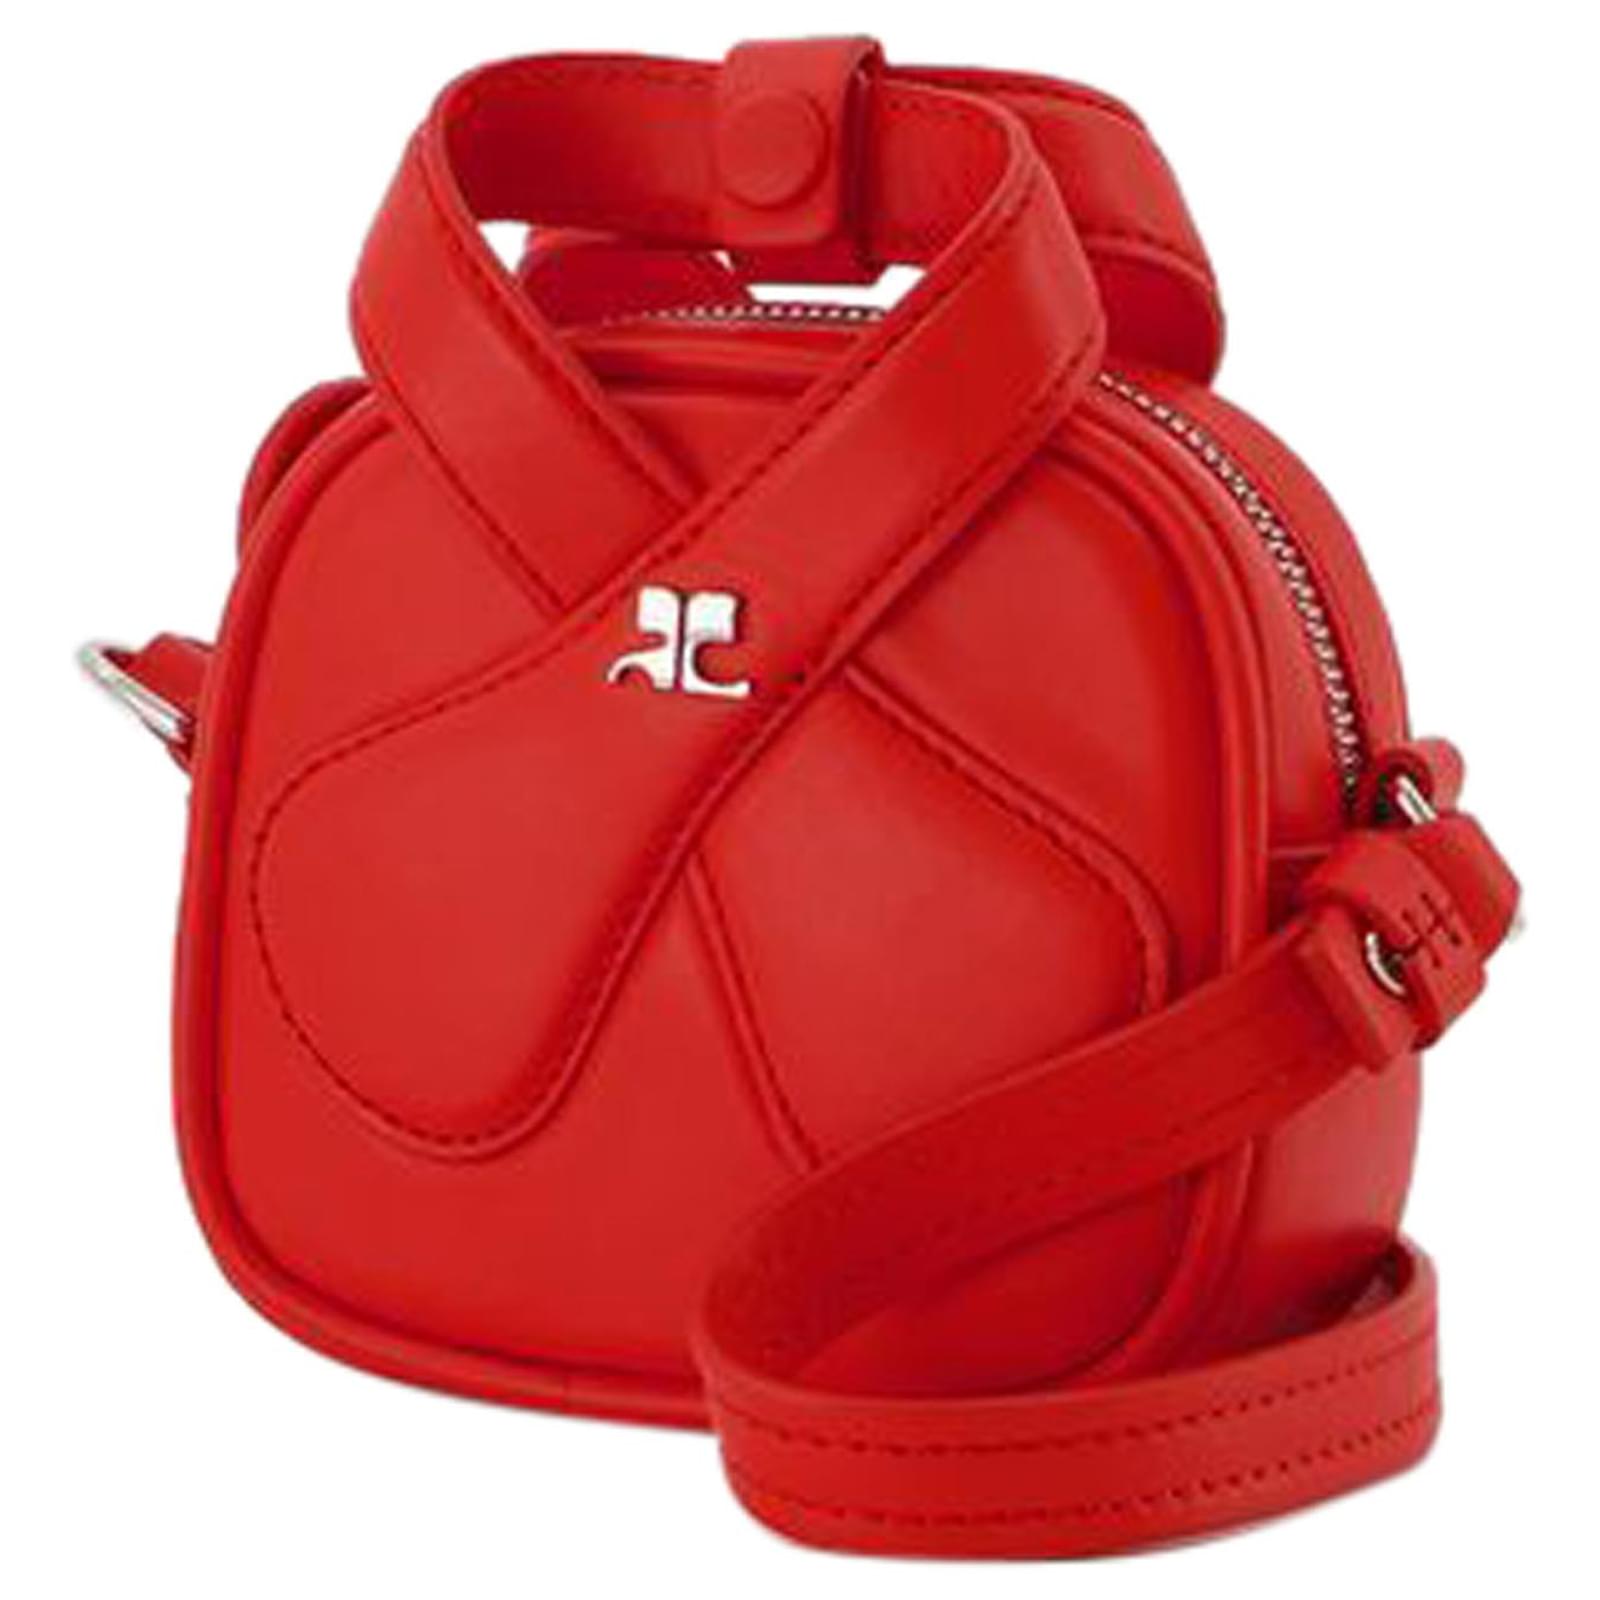 Courreges Mini Loop Bag in Red